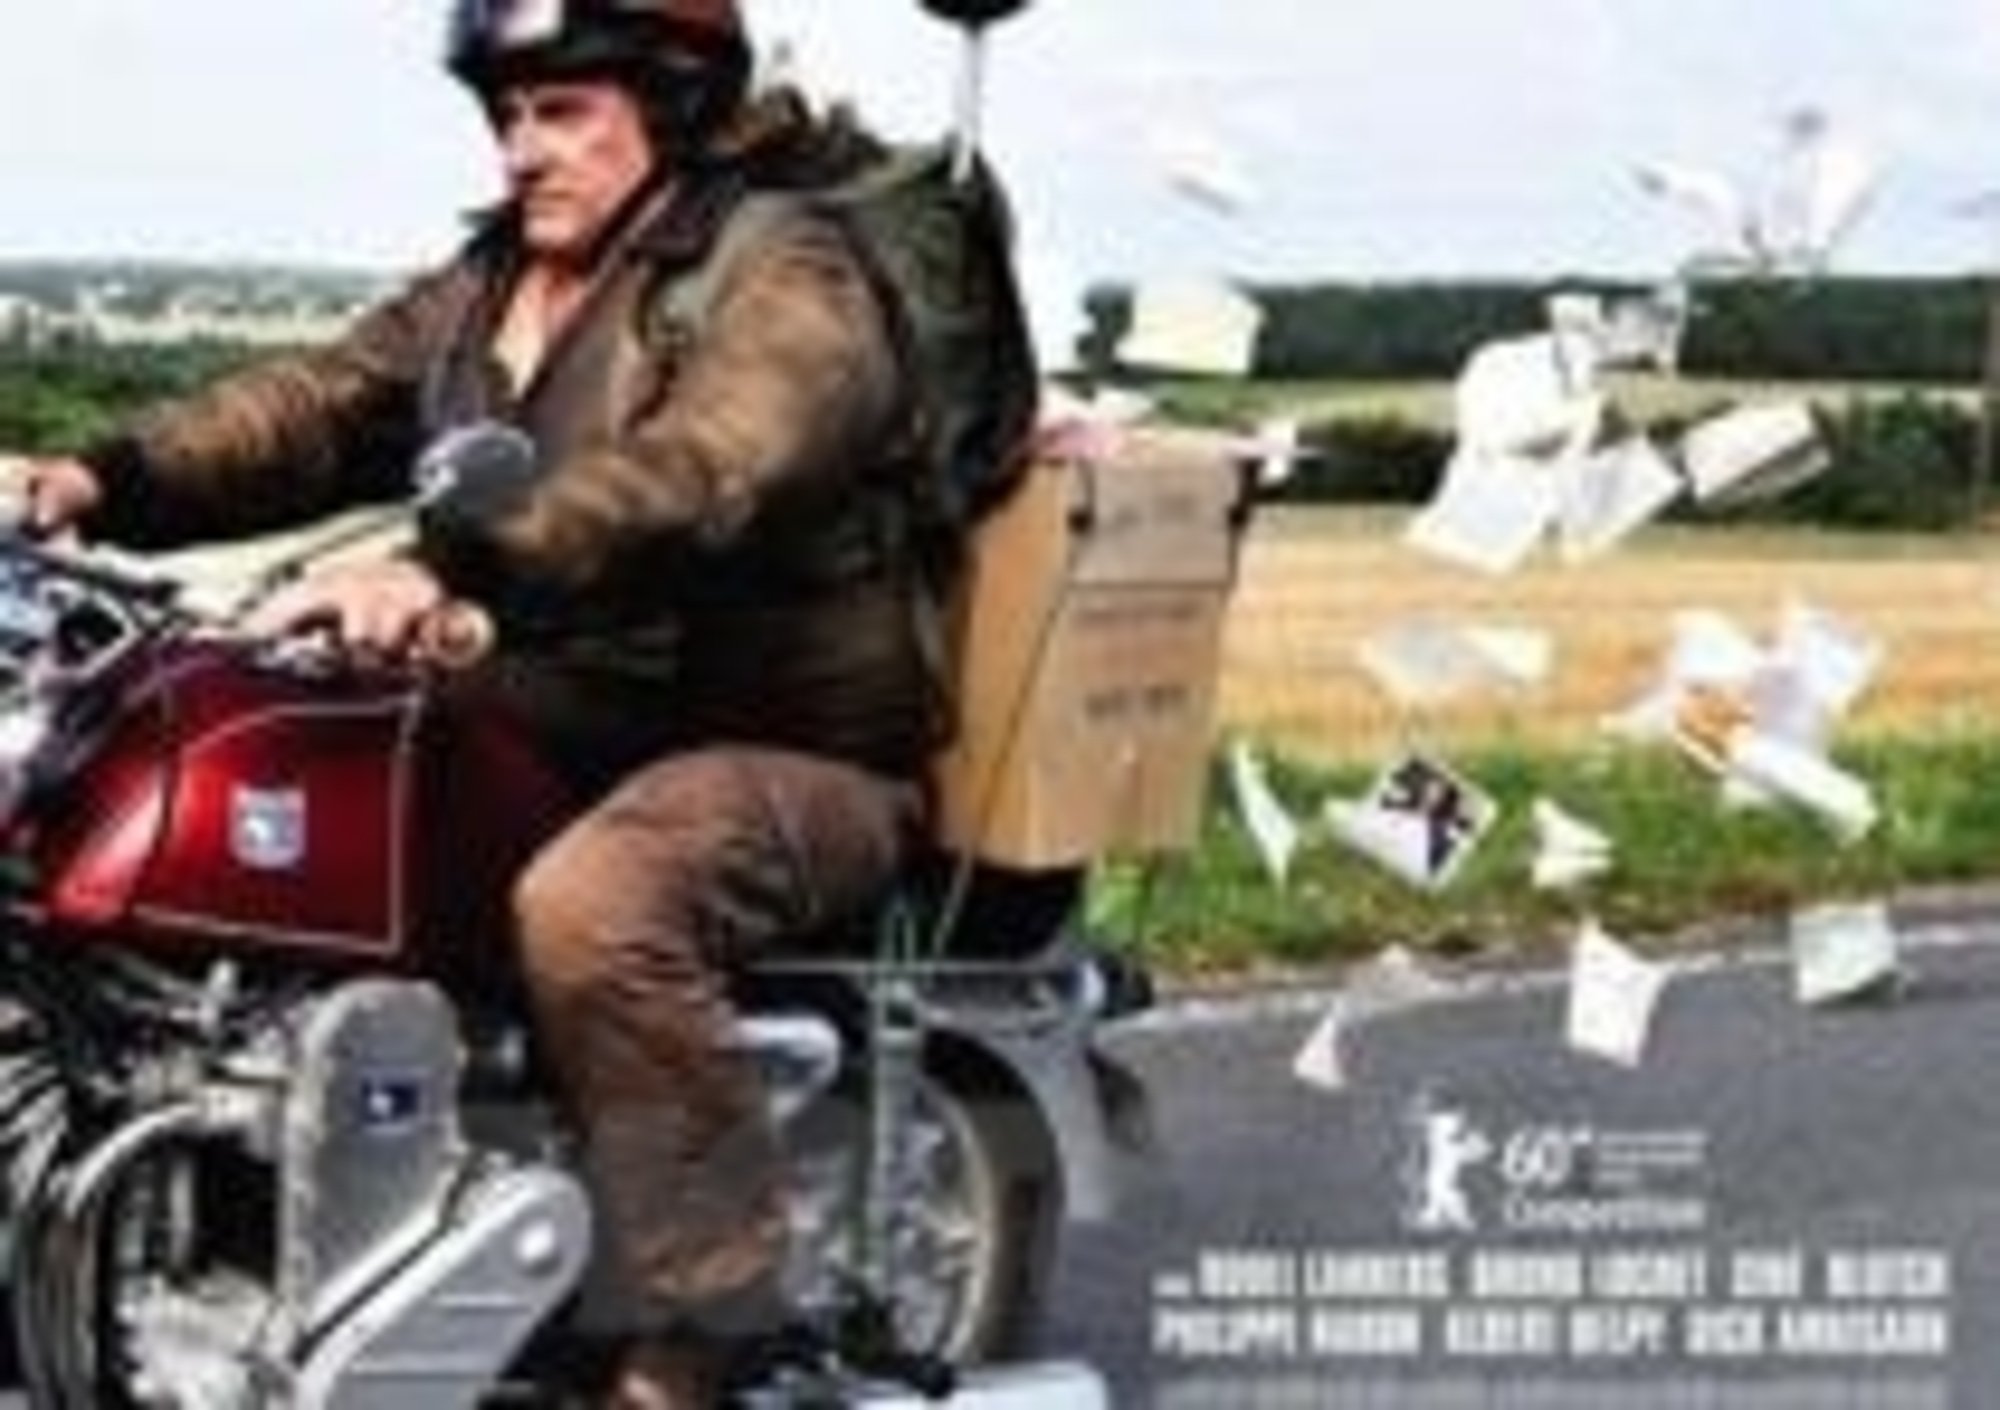 Depardieu in sella alla M&uuml;nch Mammut nel suo ultimo film